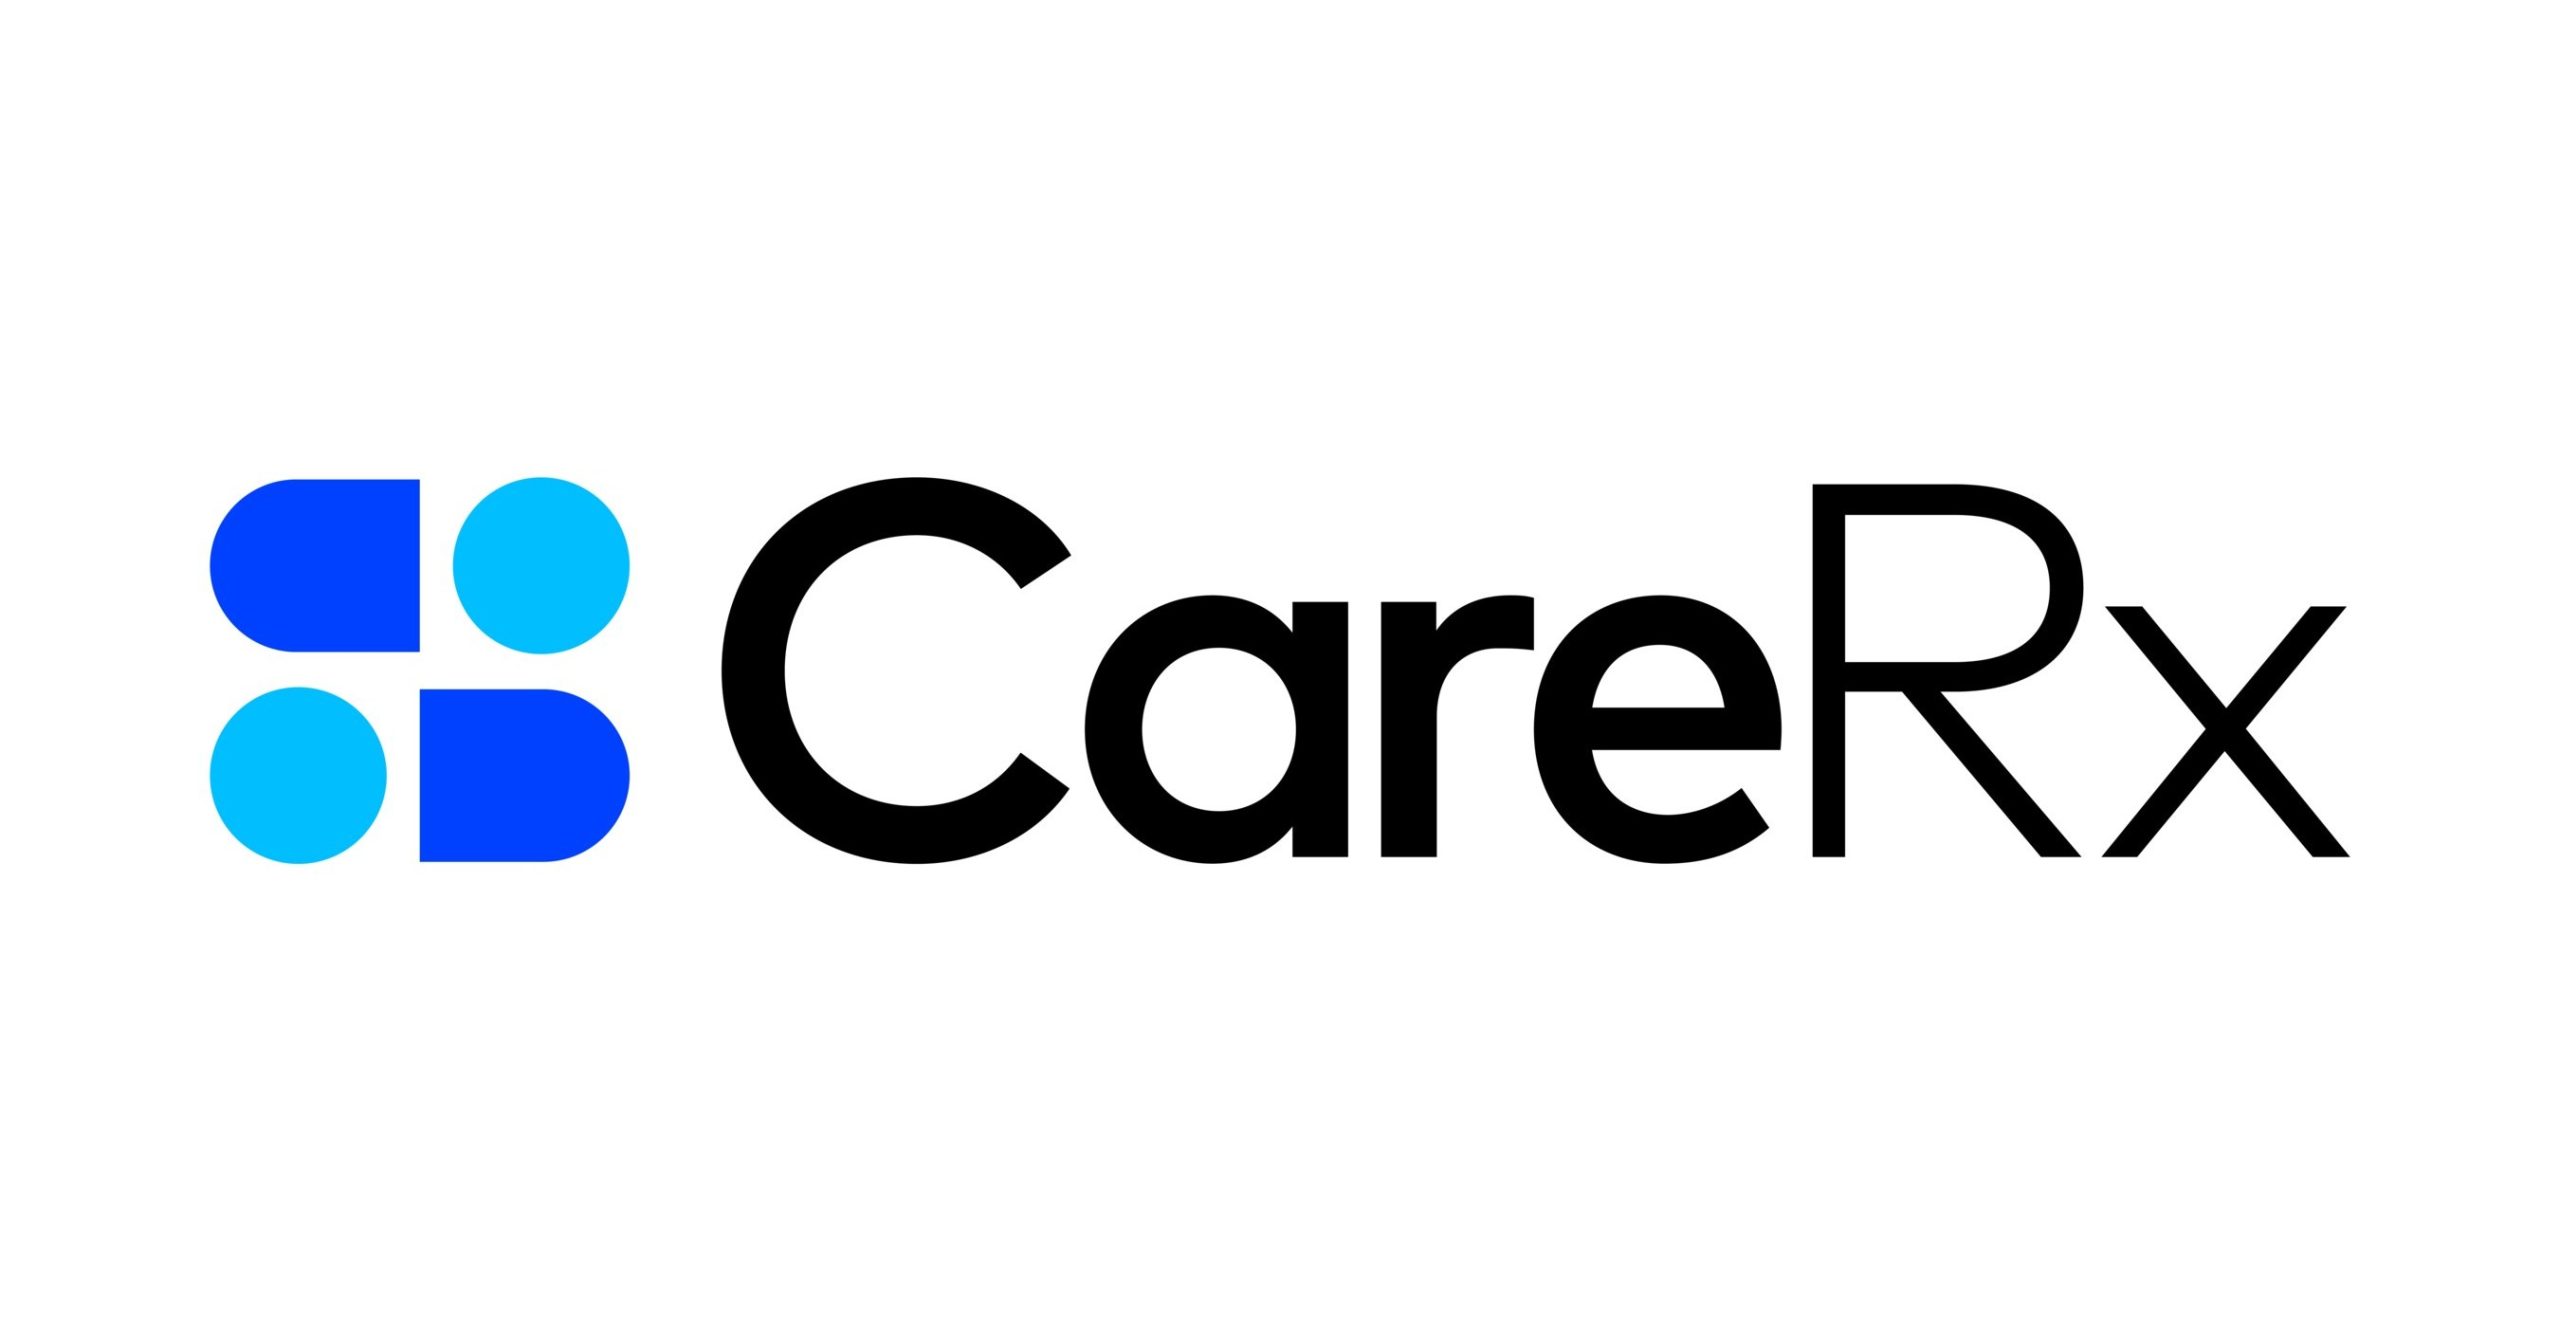 CareRx scaled